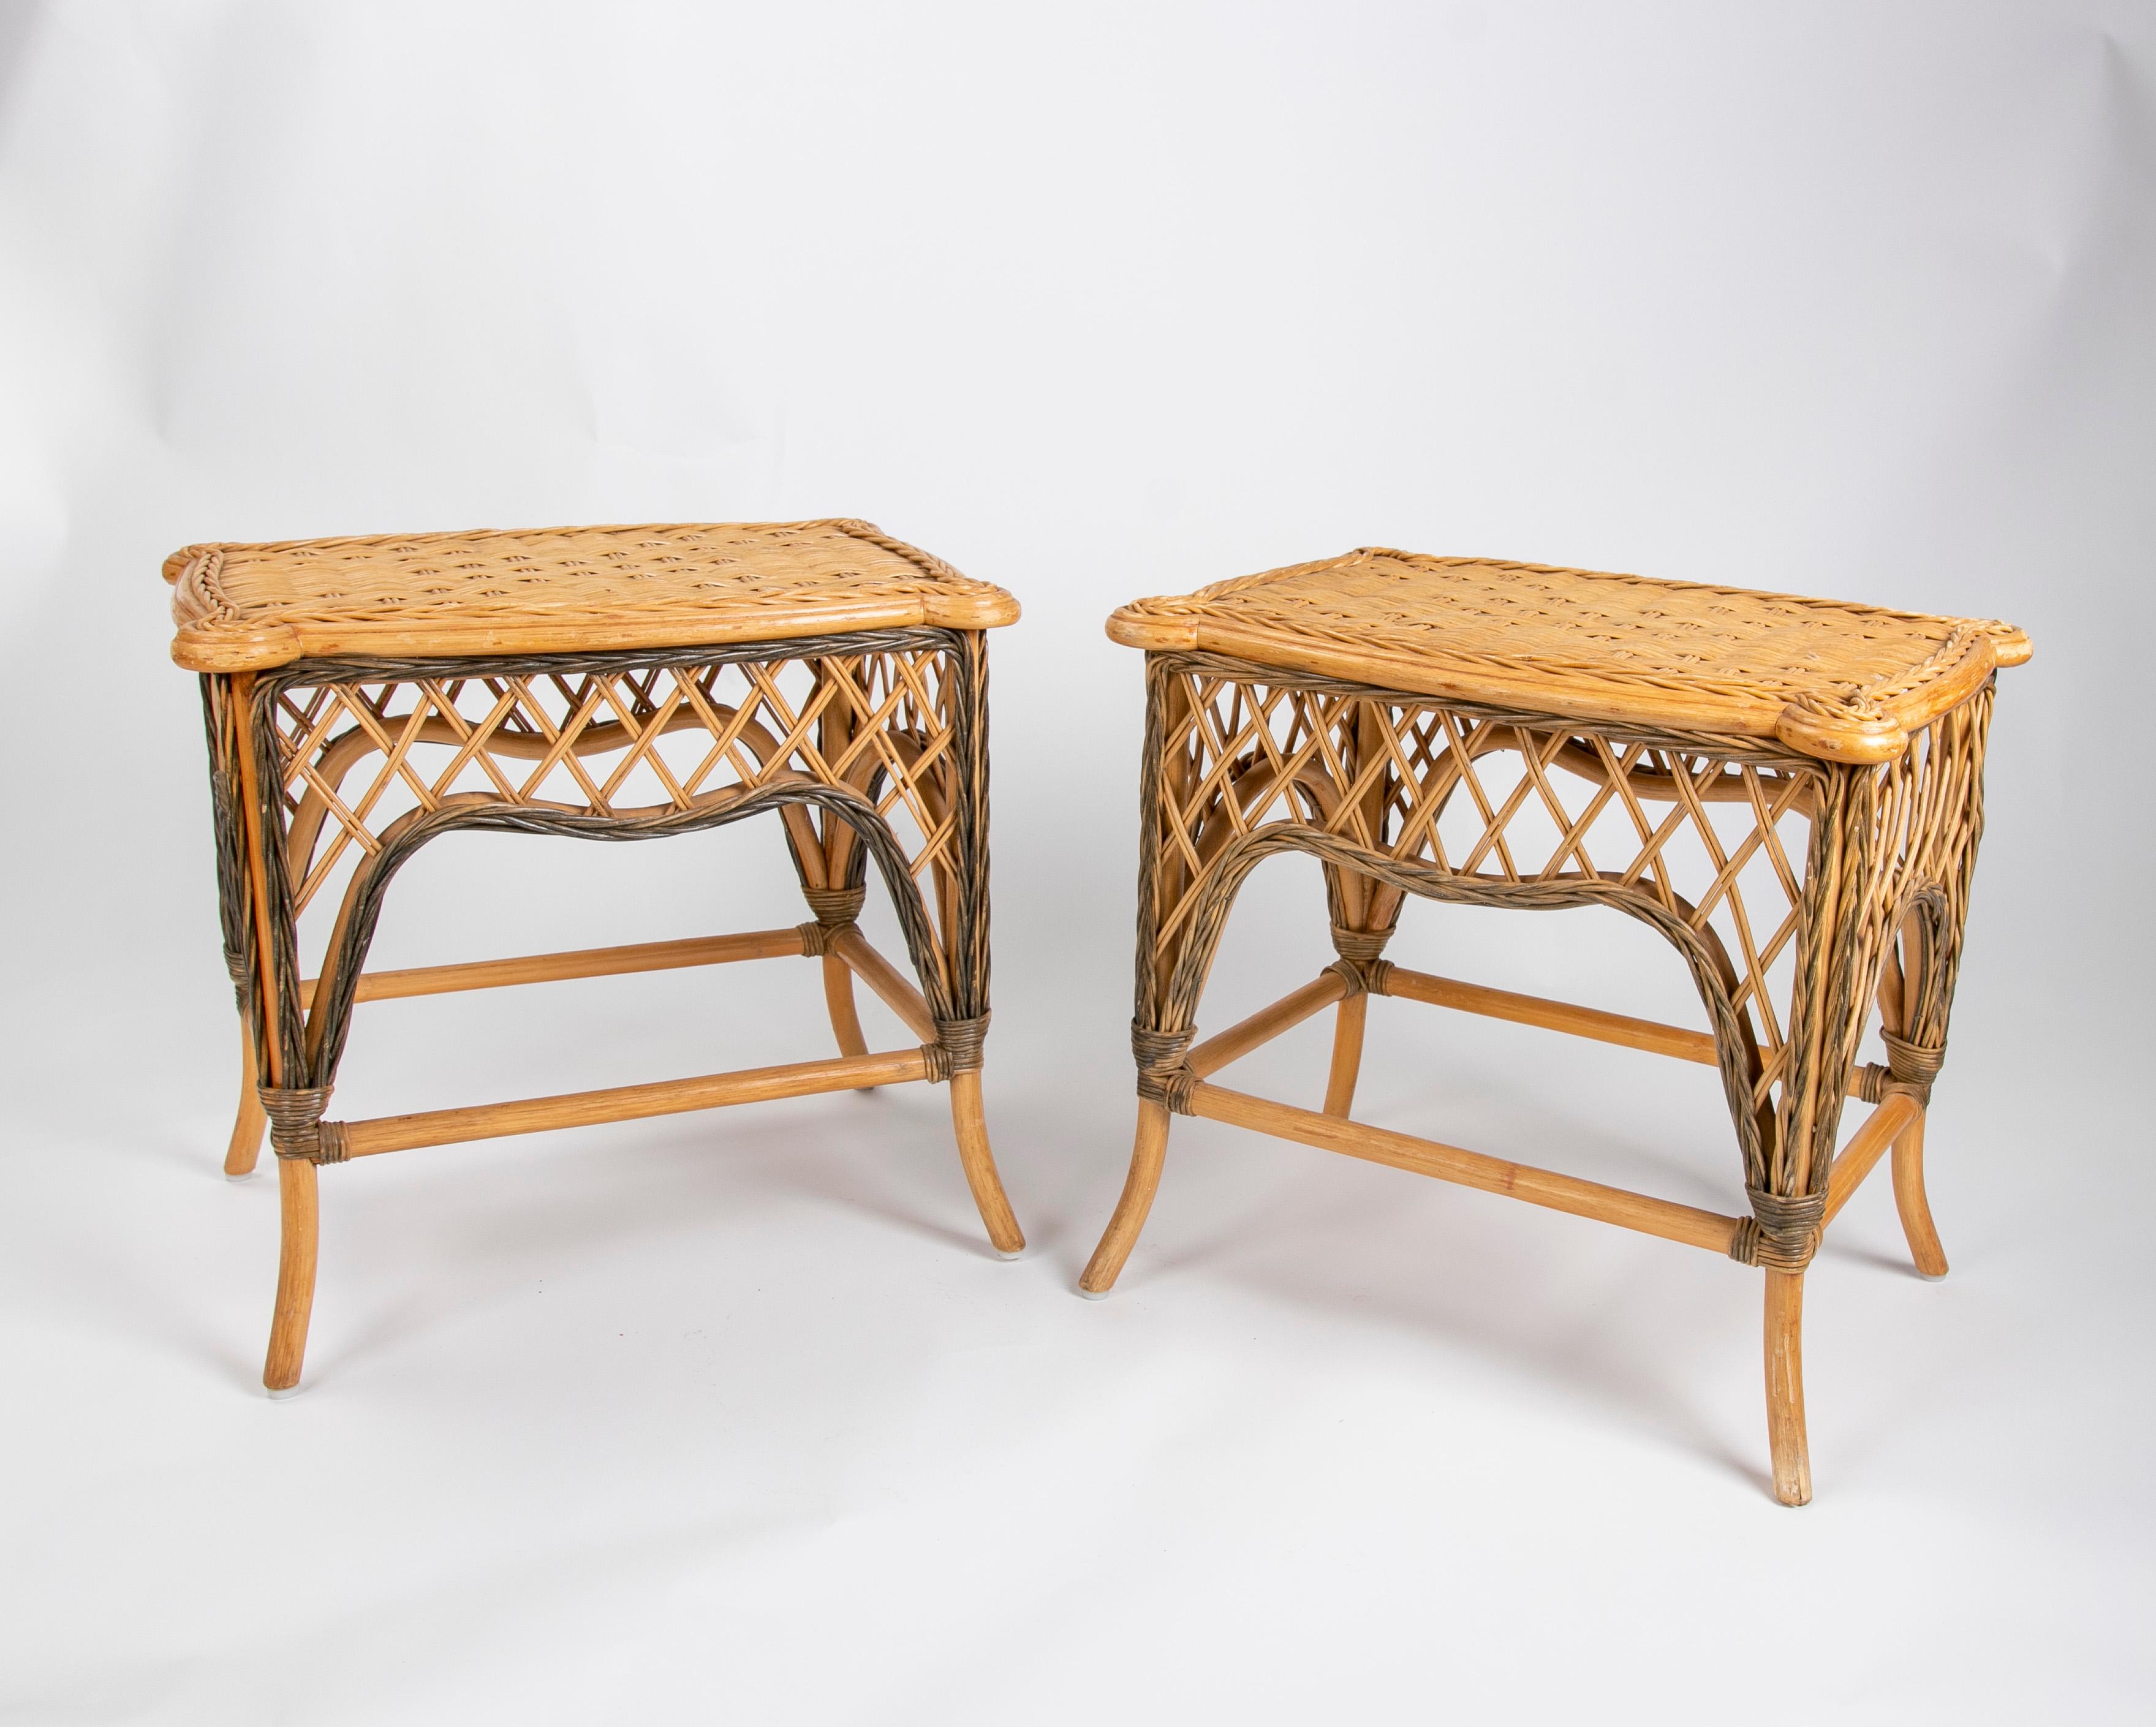 1970s Spanish pair of handmade wicker side tables.